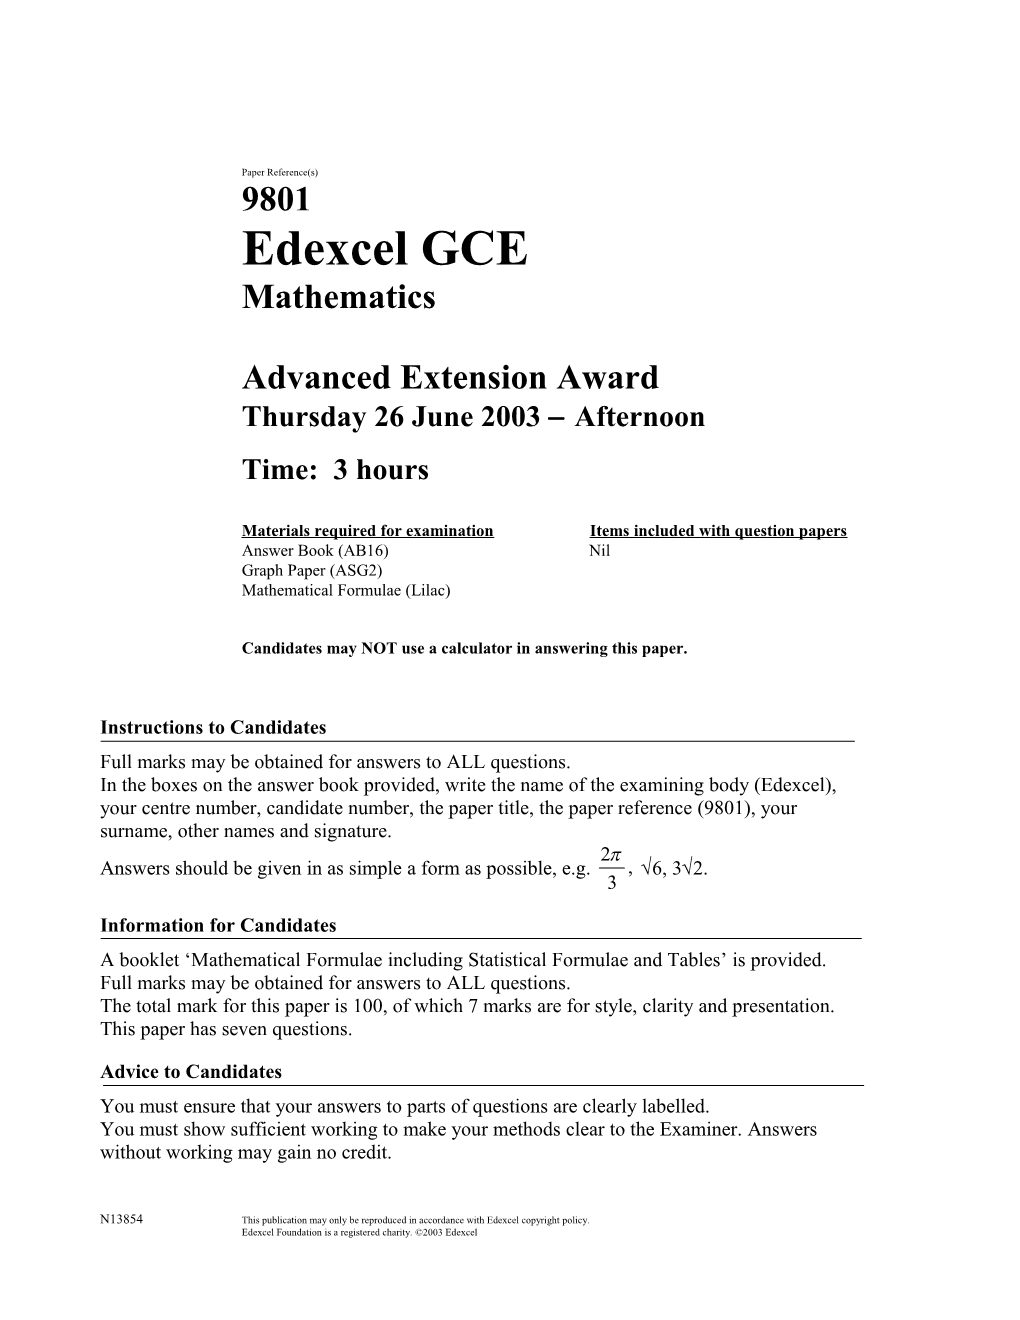 Advanced Extension Award